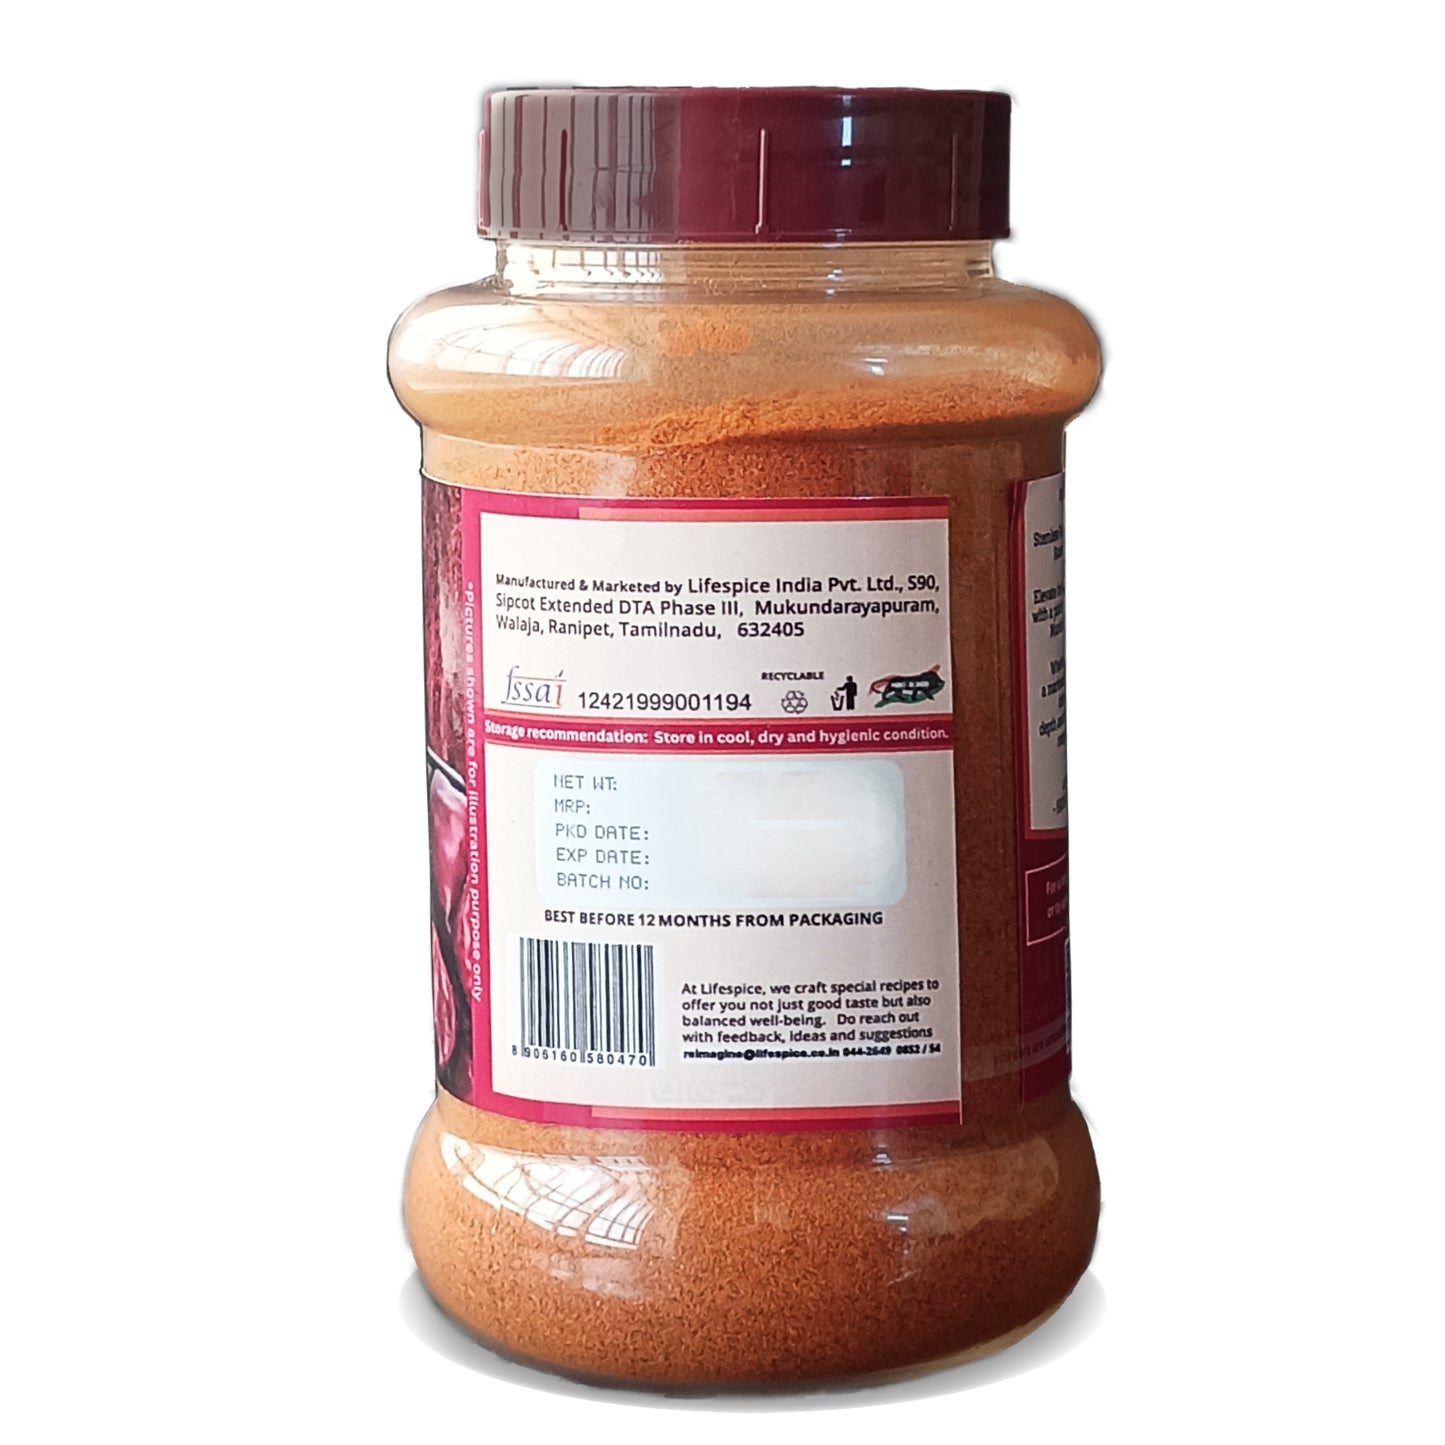 Lifespice - Ramnad Mundu Chilli Powder 200g PET Jar (Premium Roasted)